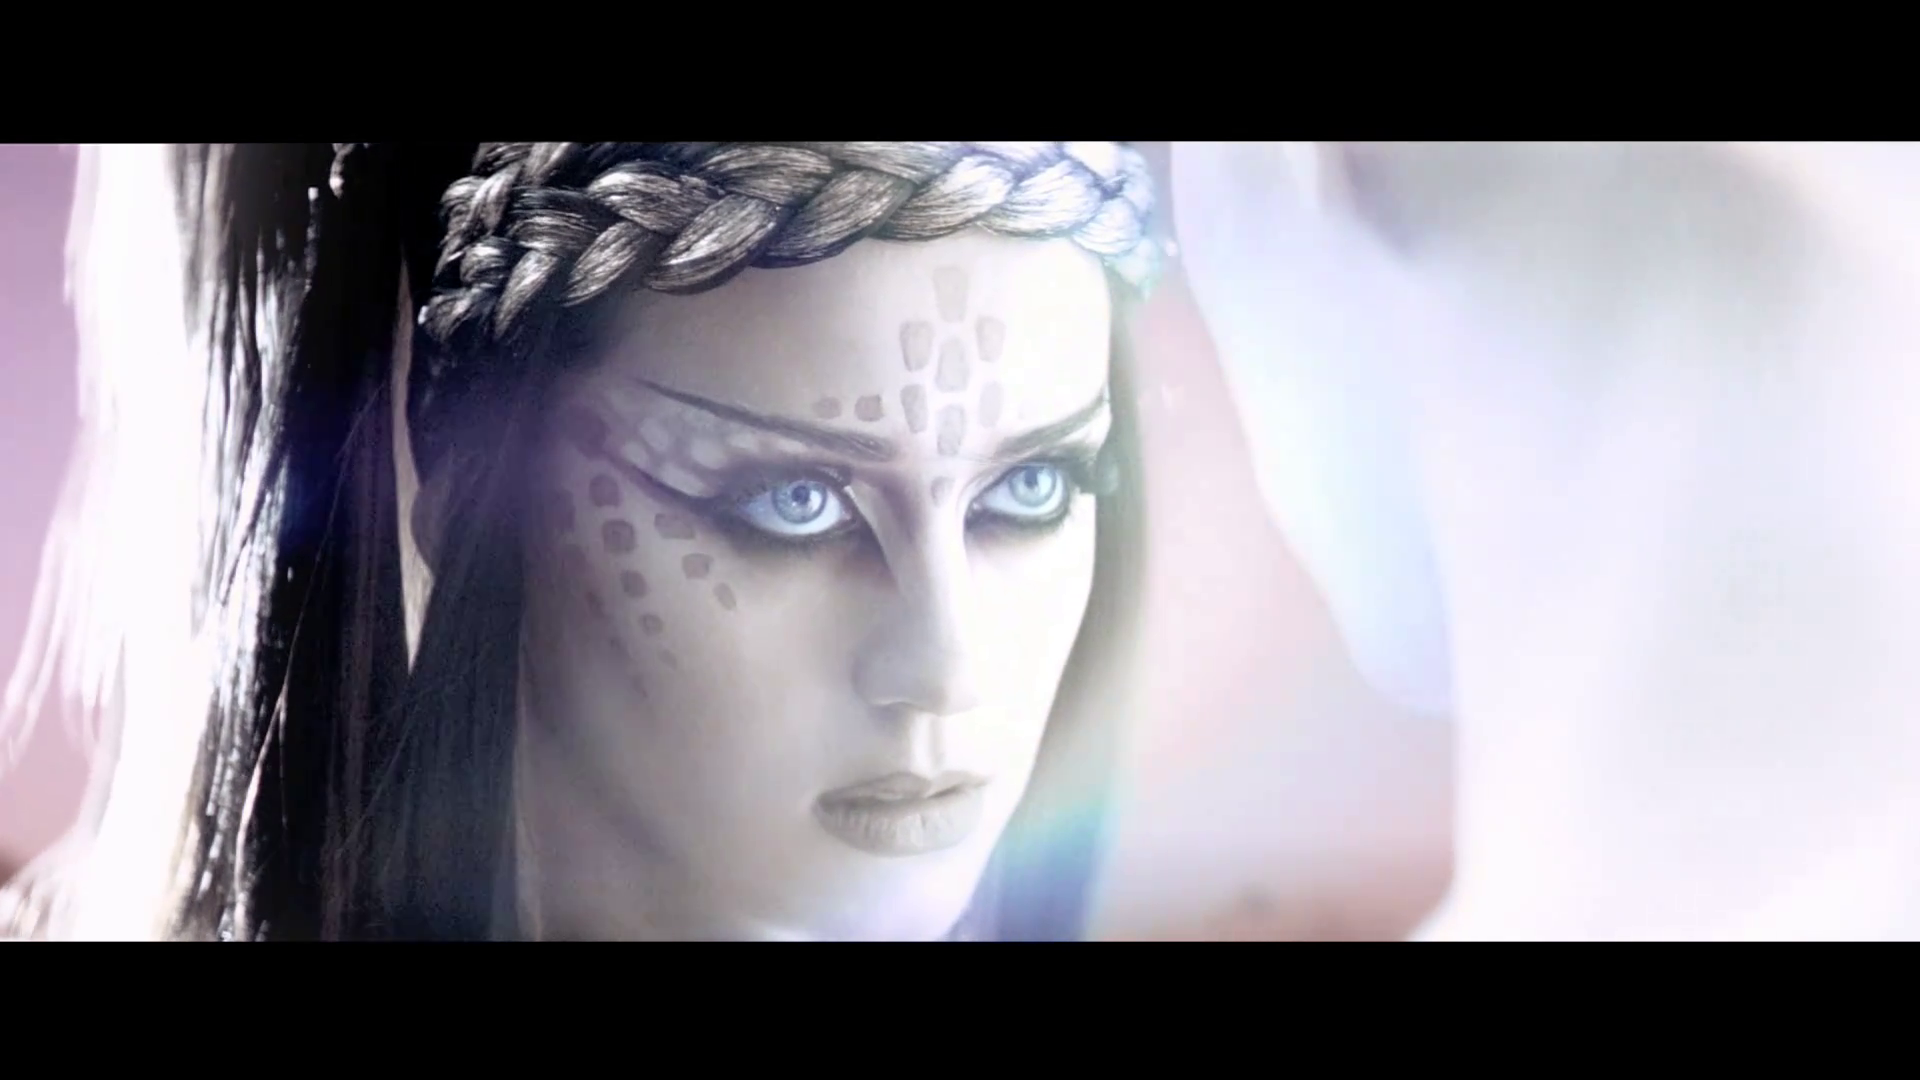 E.T. Music Video - Katy Perry Image (20627277) - Fanpop